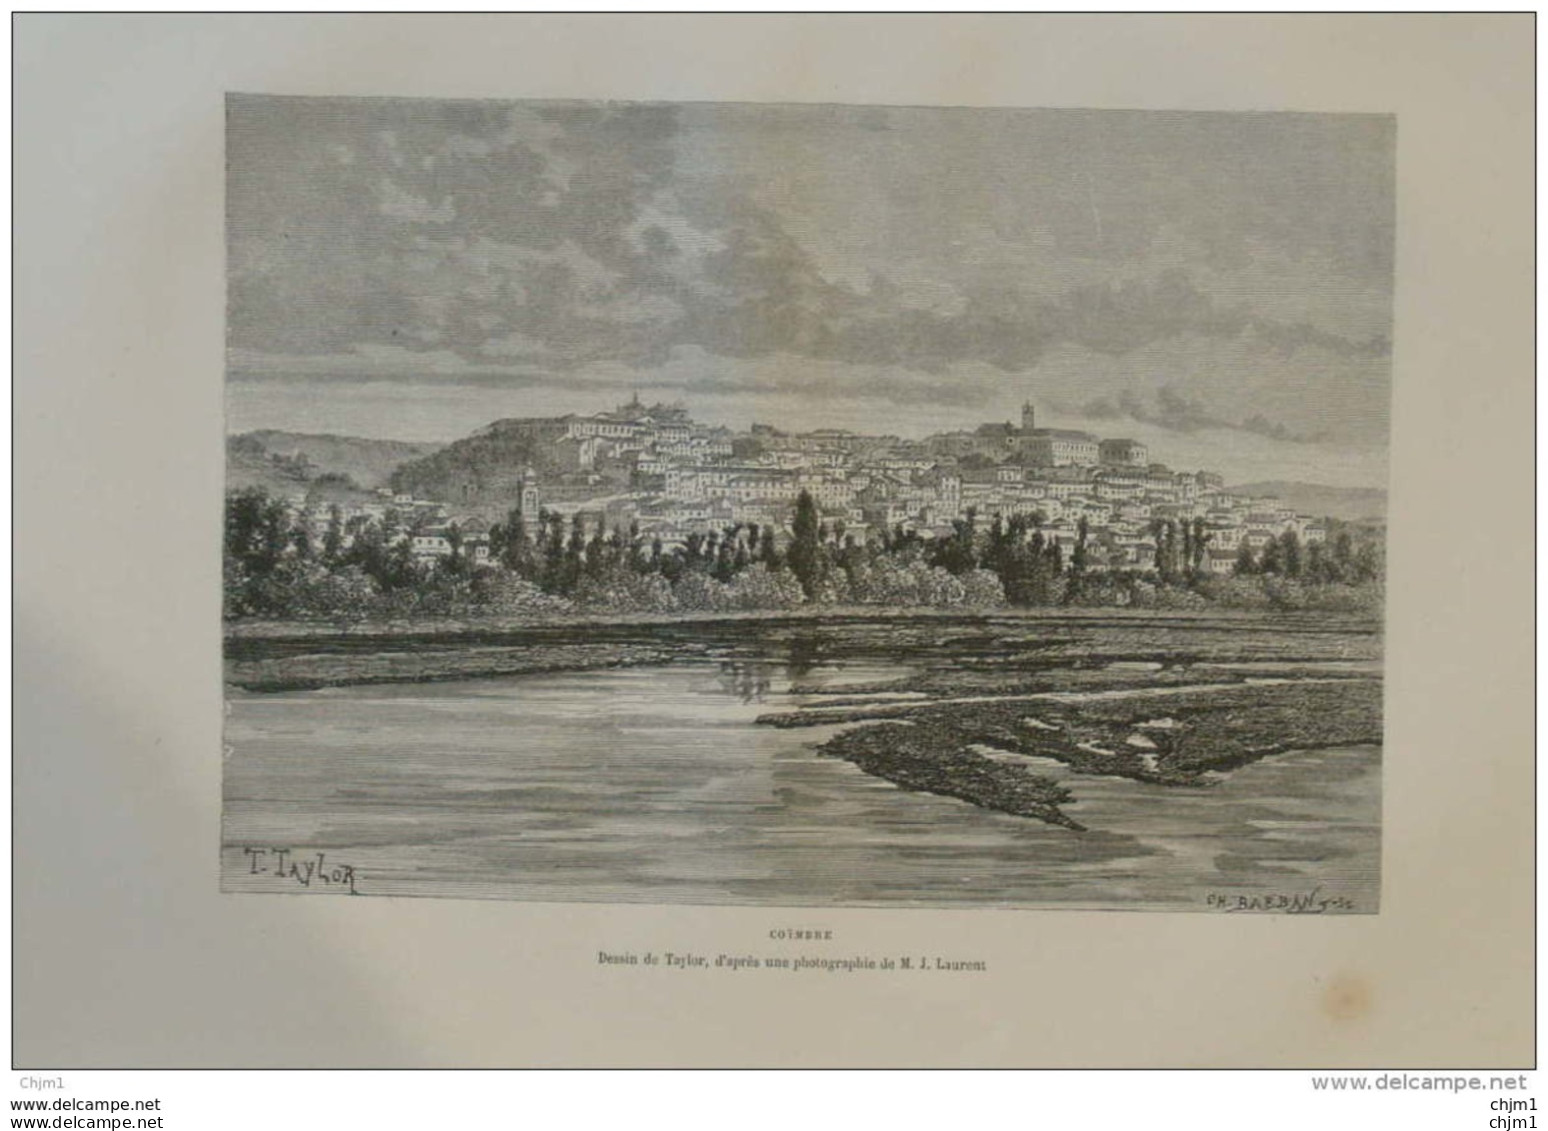 Coimbre - Page Original 1876 - Historical Documents